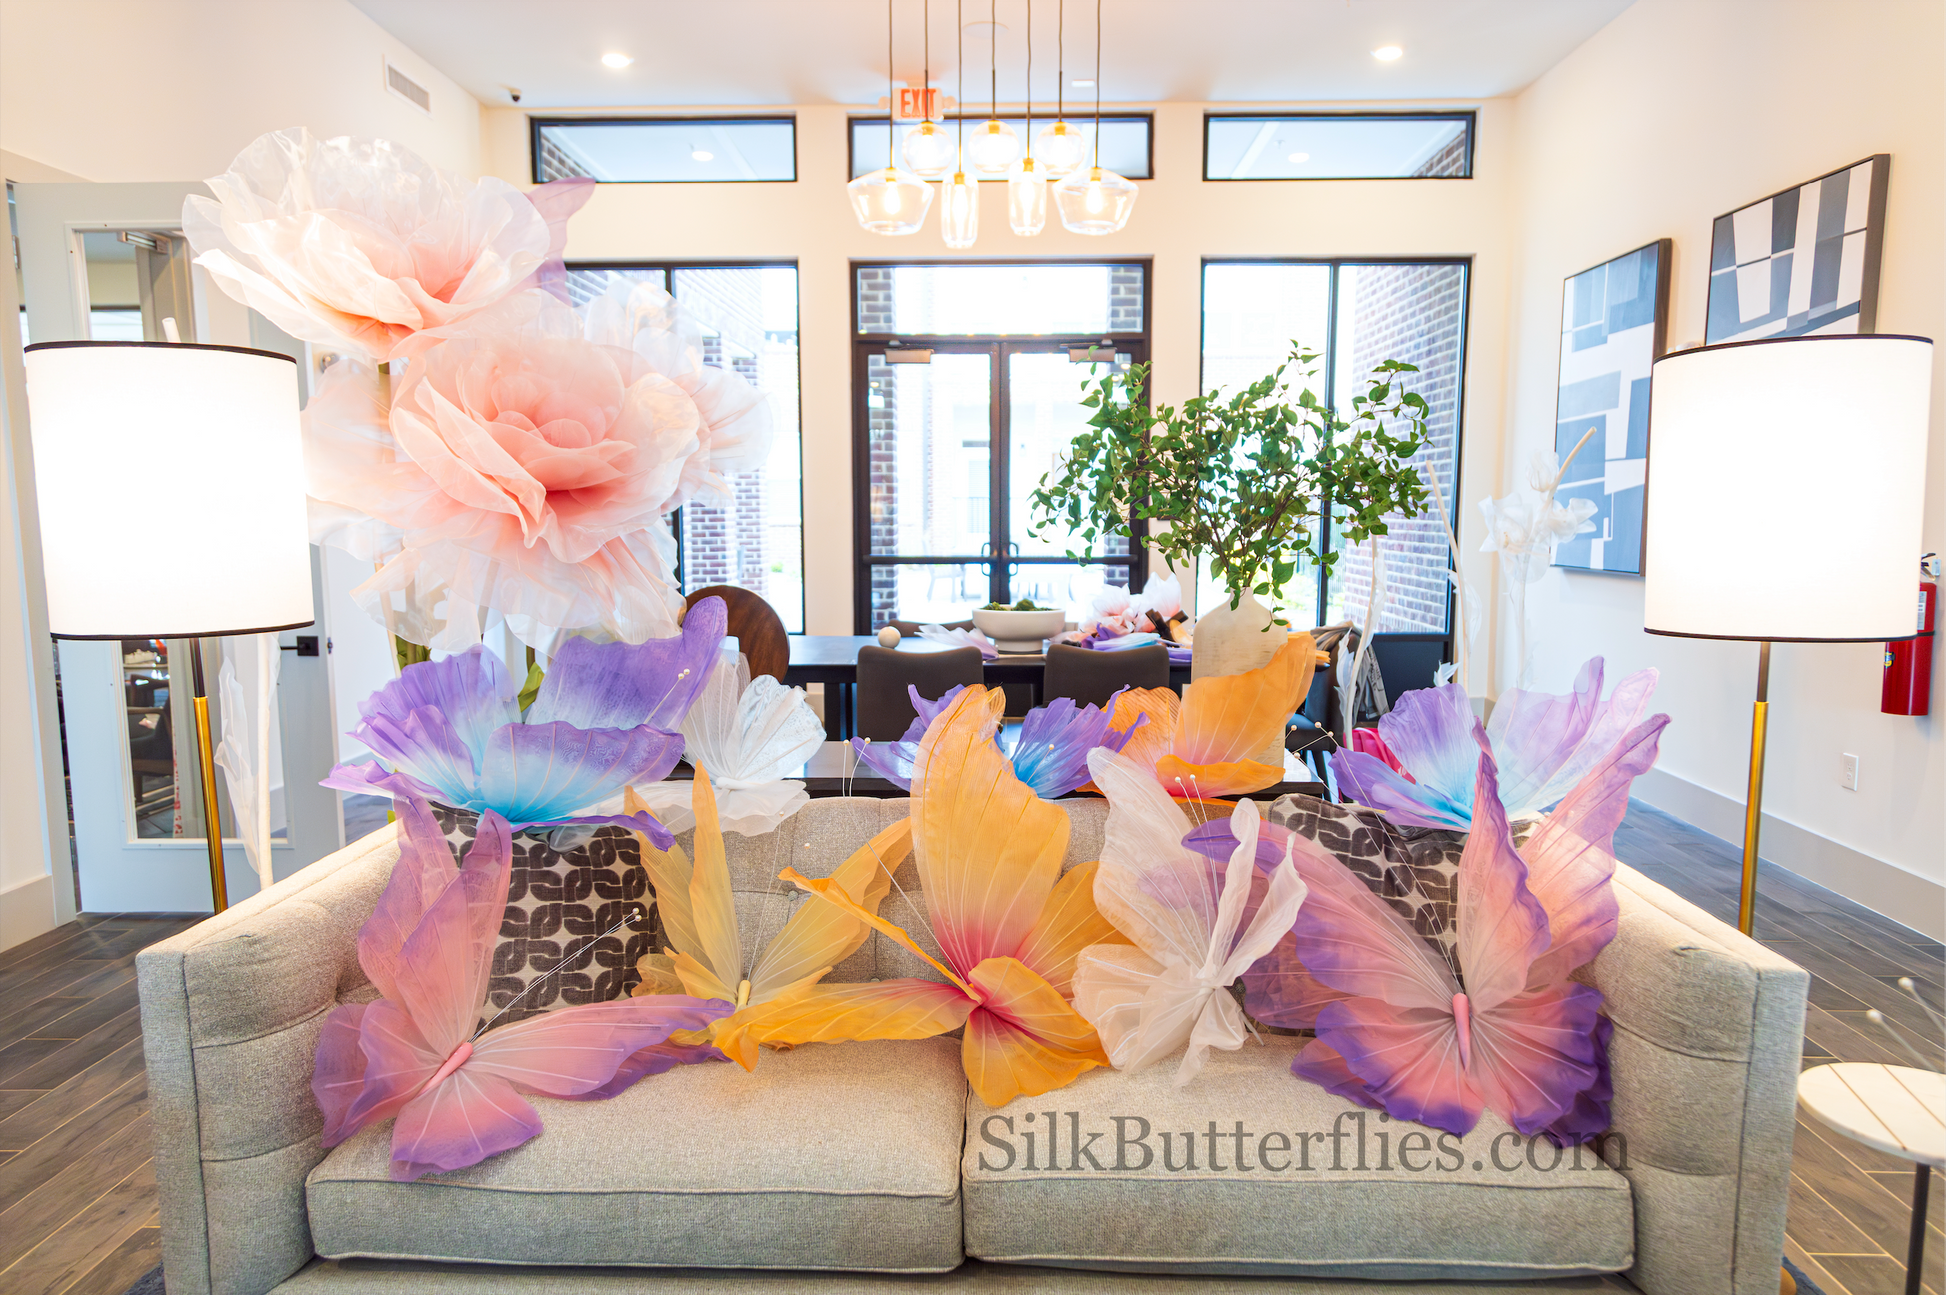 Giant Butterflies for event decor